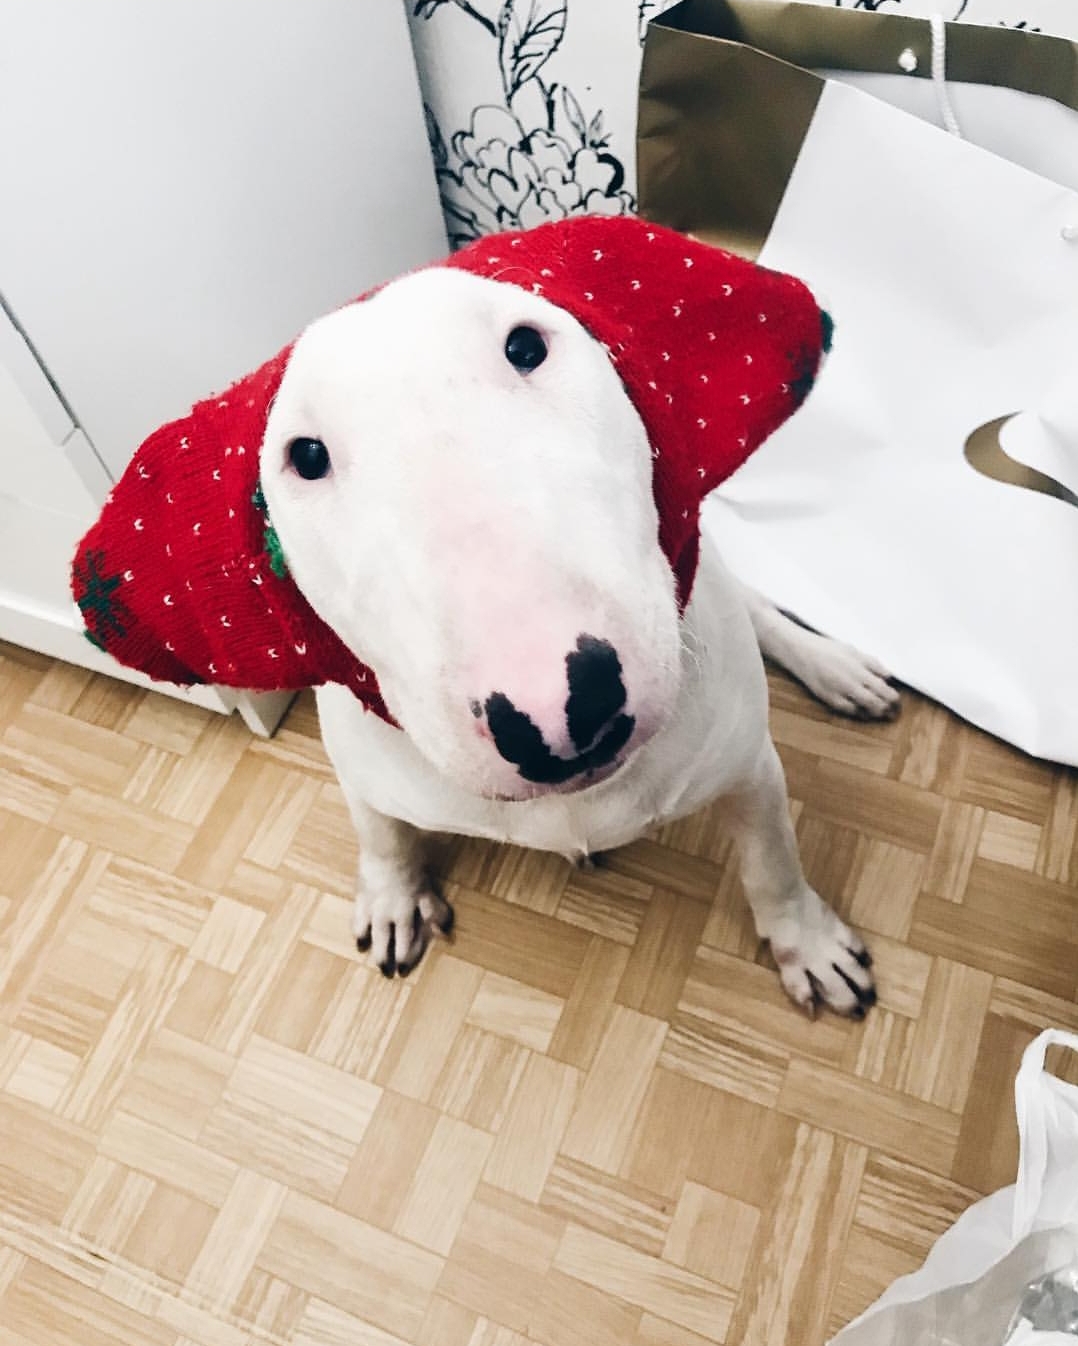 English Bull Terrier sitting on the floor wearing its cute strawberry headband